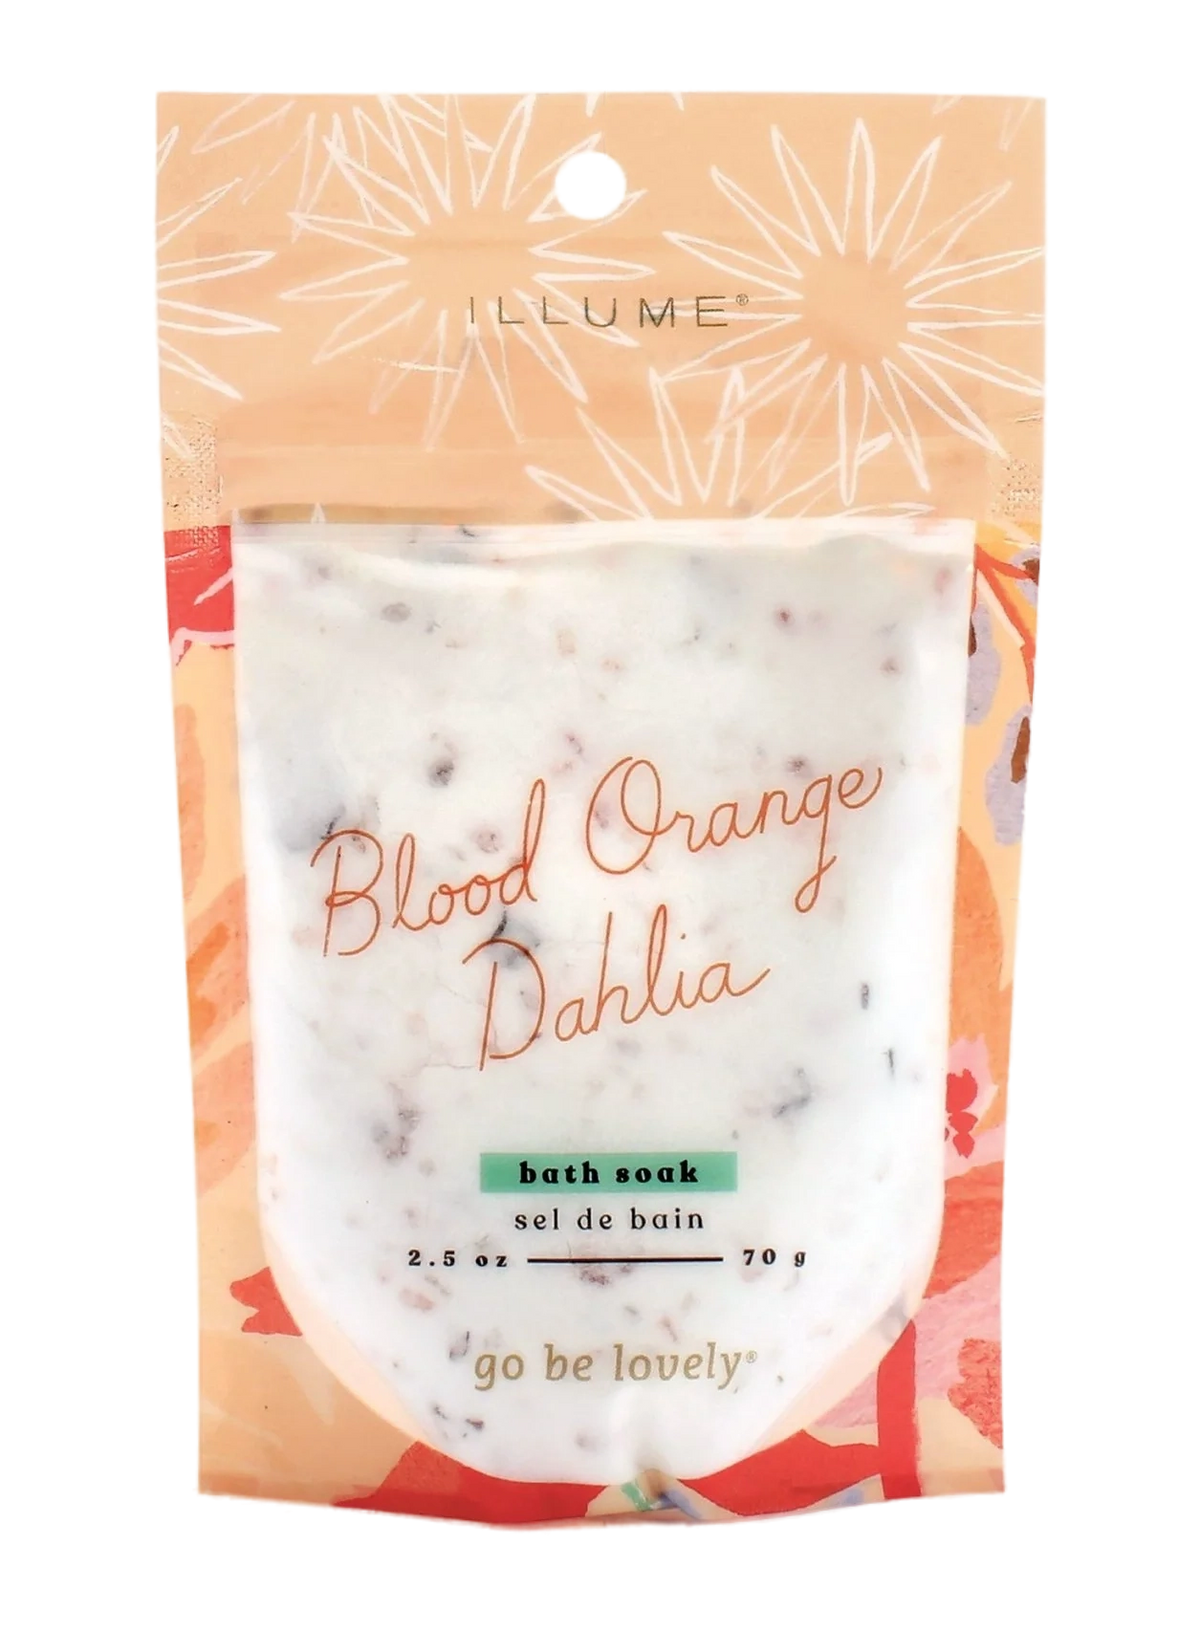 Blood Orange Dahlia GBL Bath Soak